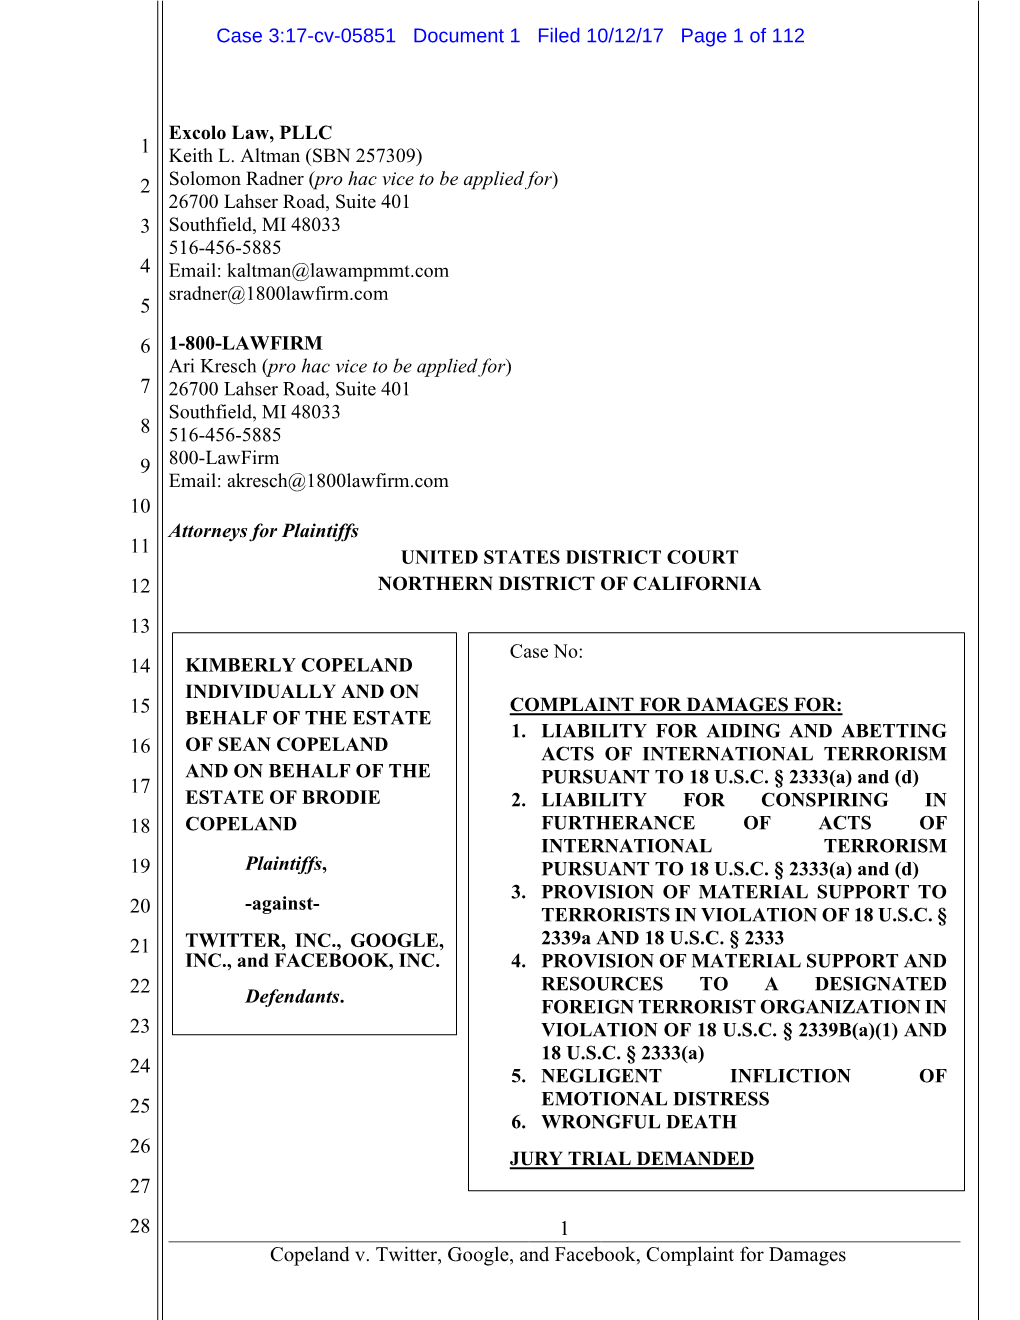 Copeland V. Twitter, Google, and Facebook, Complaint for Damages Case 3:17-Cv-05851 Document 1 Filed 10/12/17 Page 2 of 112